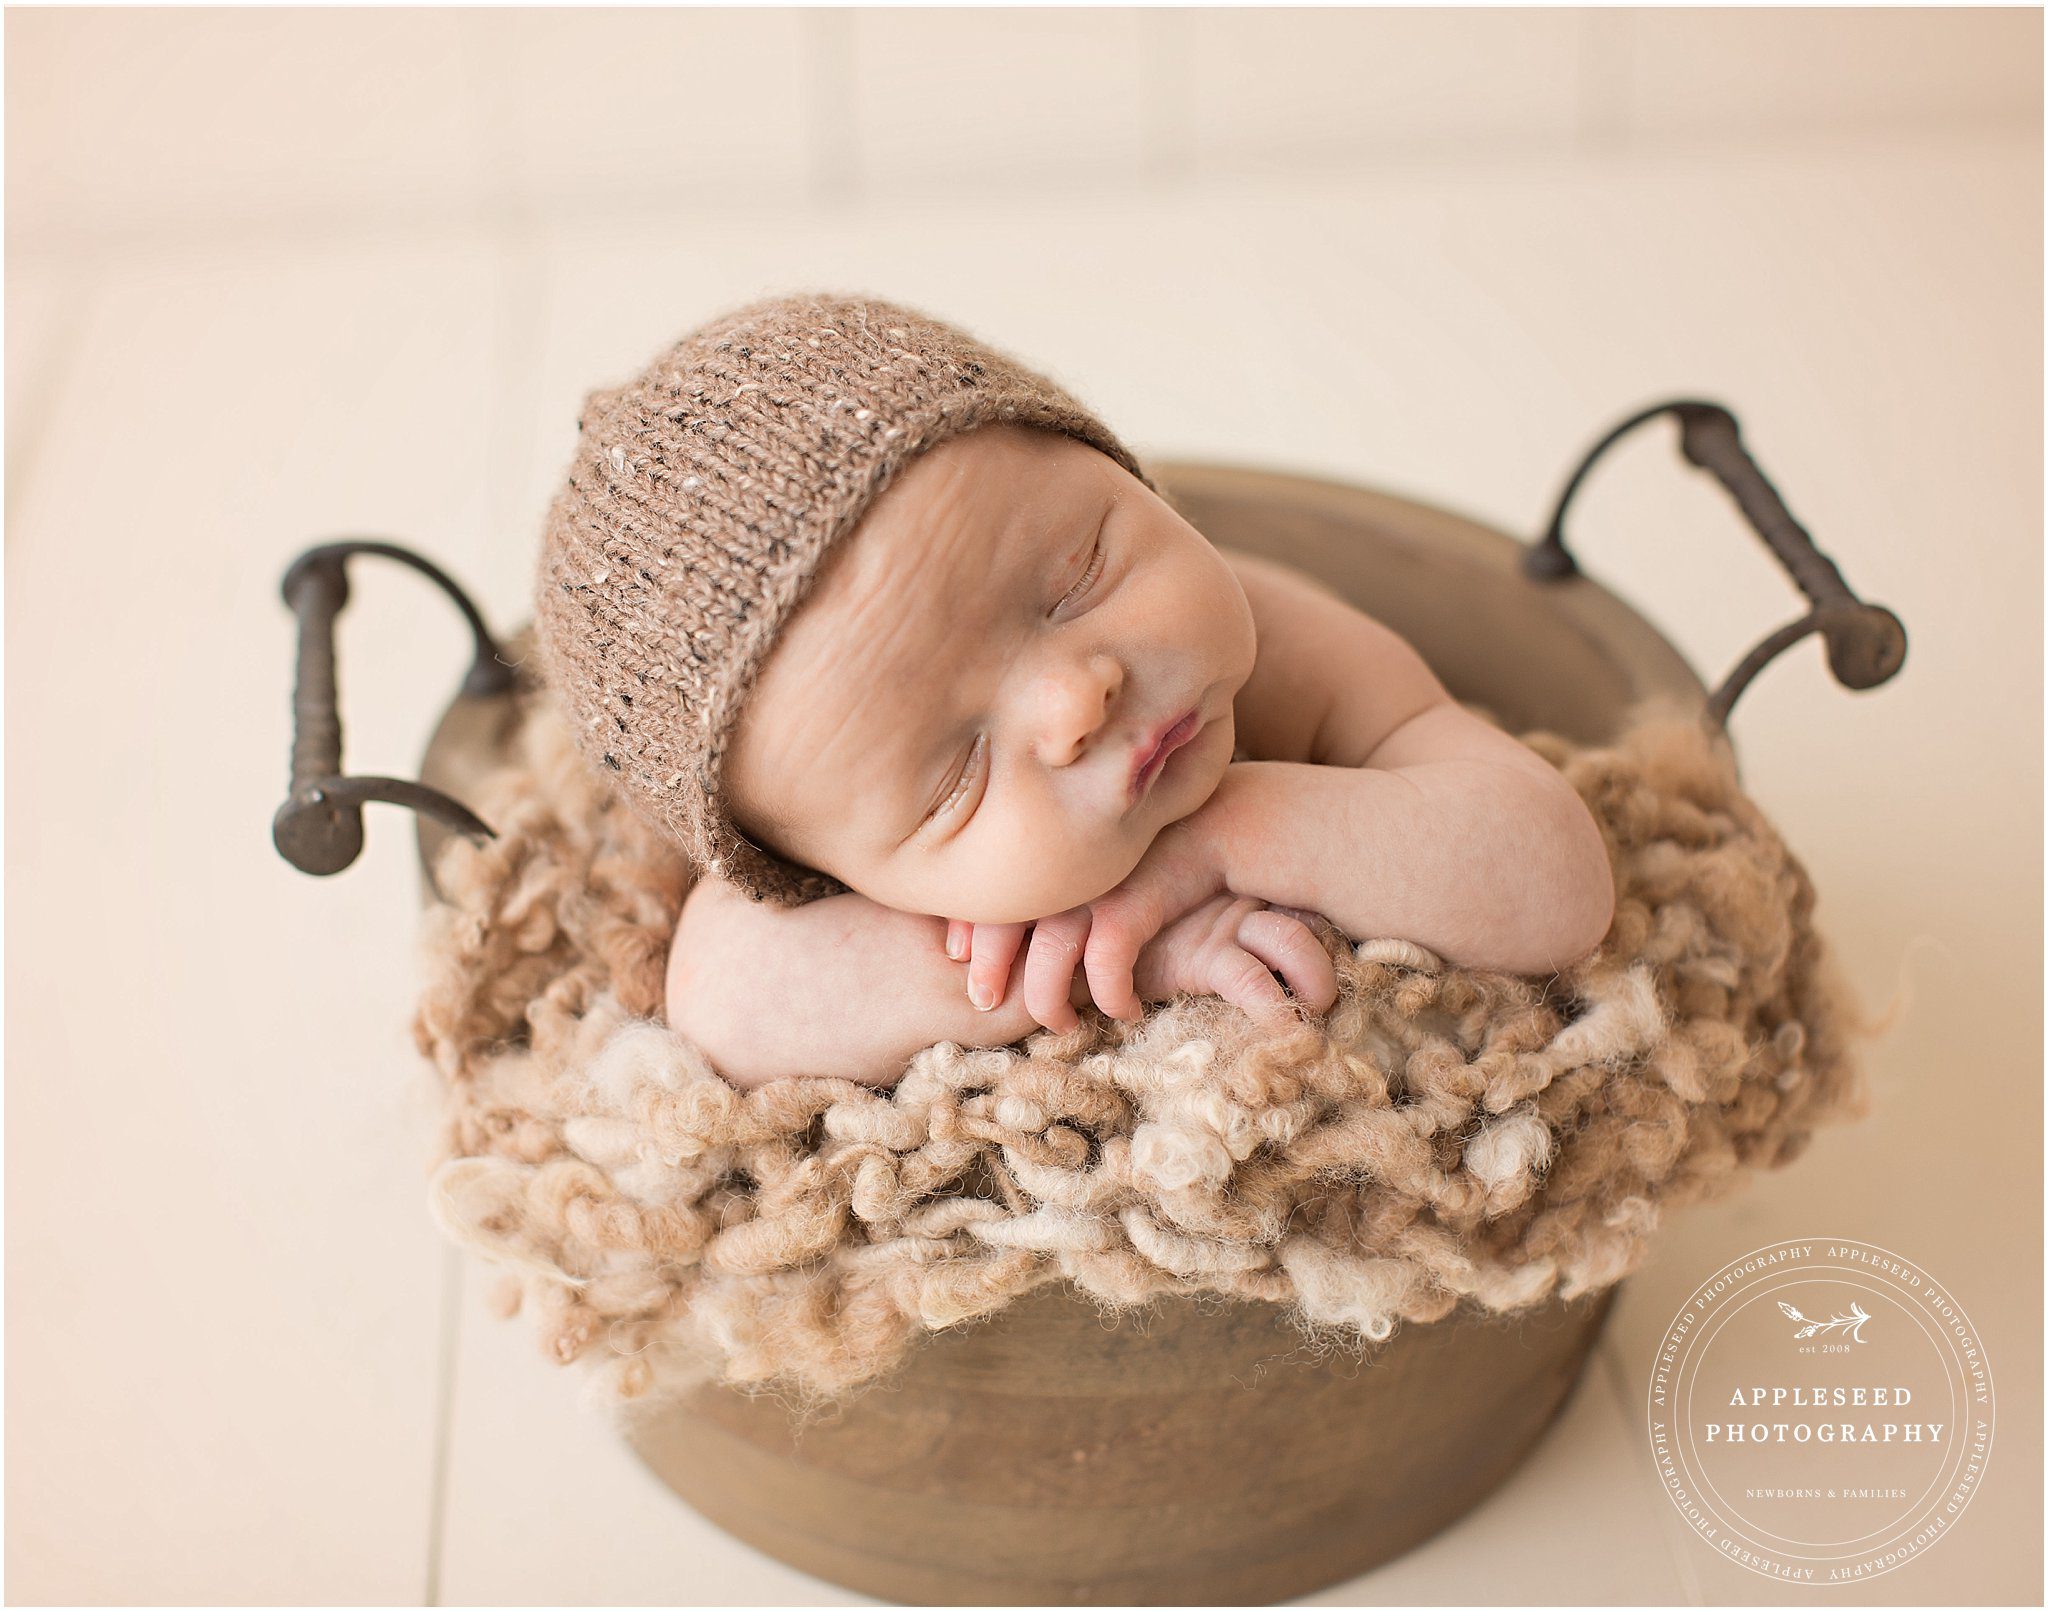 Baby Harrison | Atlanta Newborn Photographer | Appleseed Photography